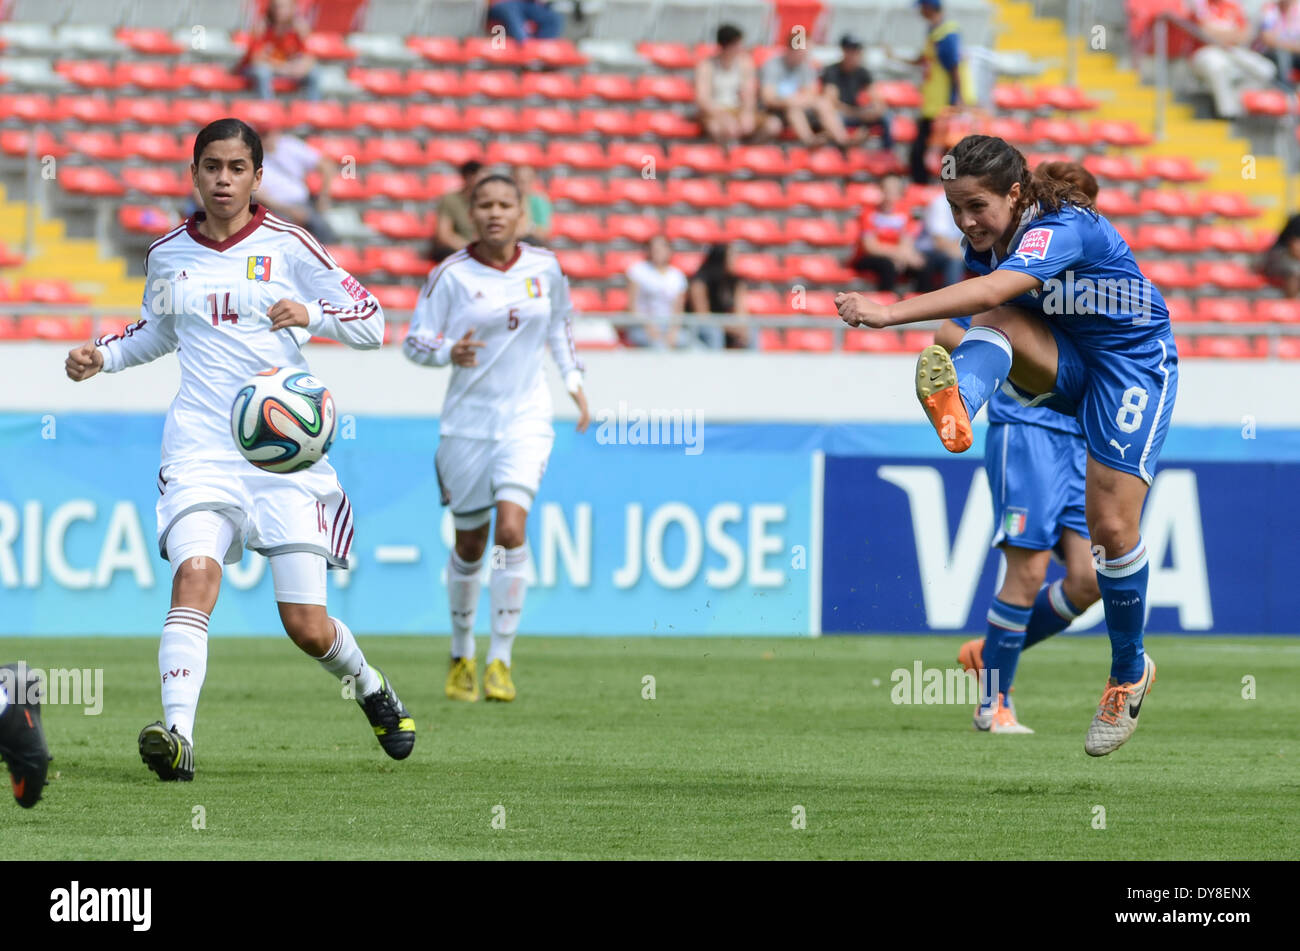 Italy player Flaminia SIMONETTI (8) kicks the ball. Stock Photo